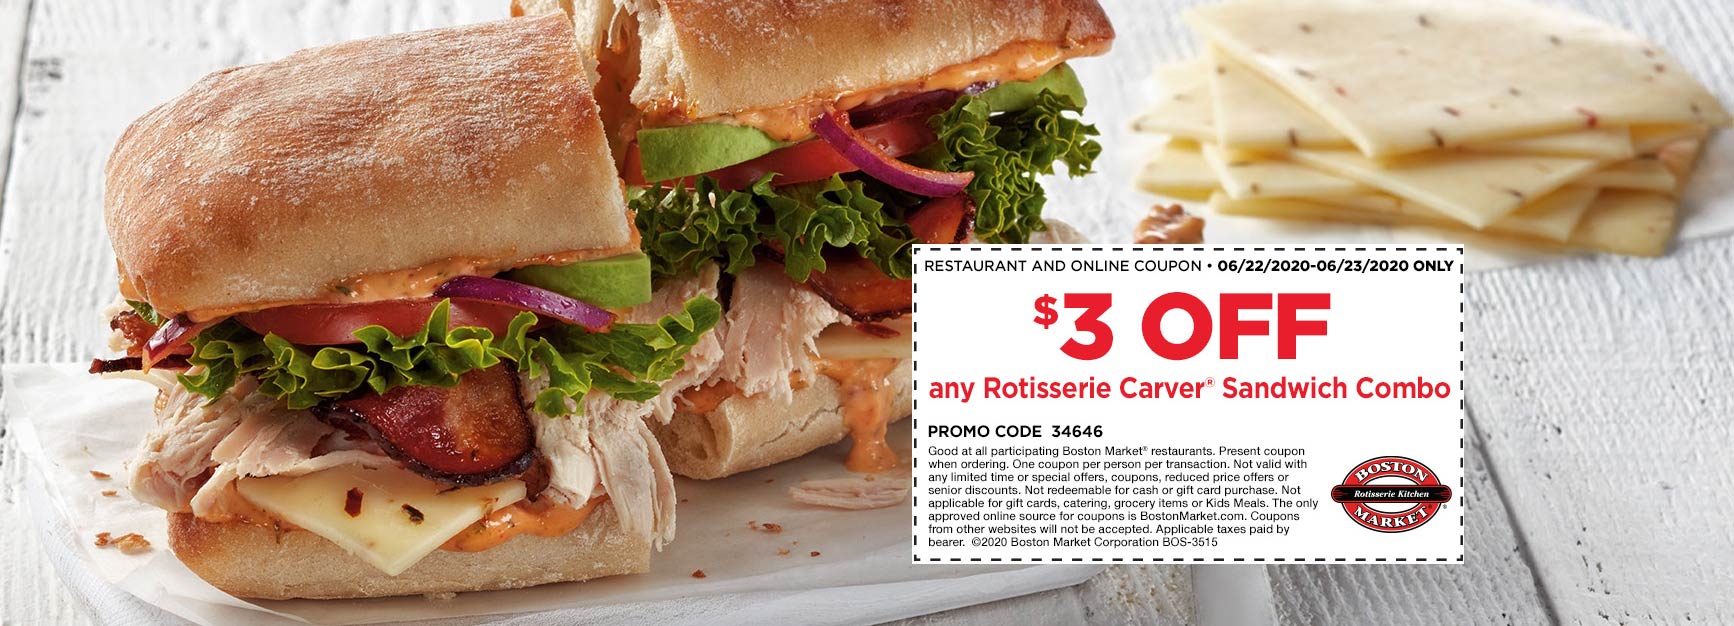 Boston Market restaurants Coupon  $3 off a rotisserie carver sandwich combo meal at Boston Market #bostonmarket